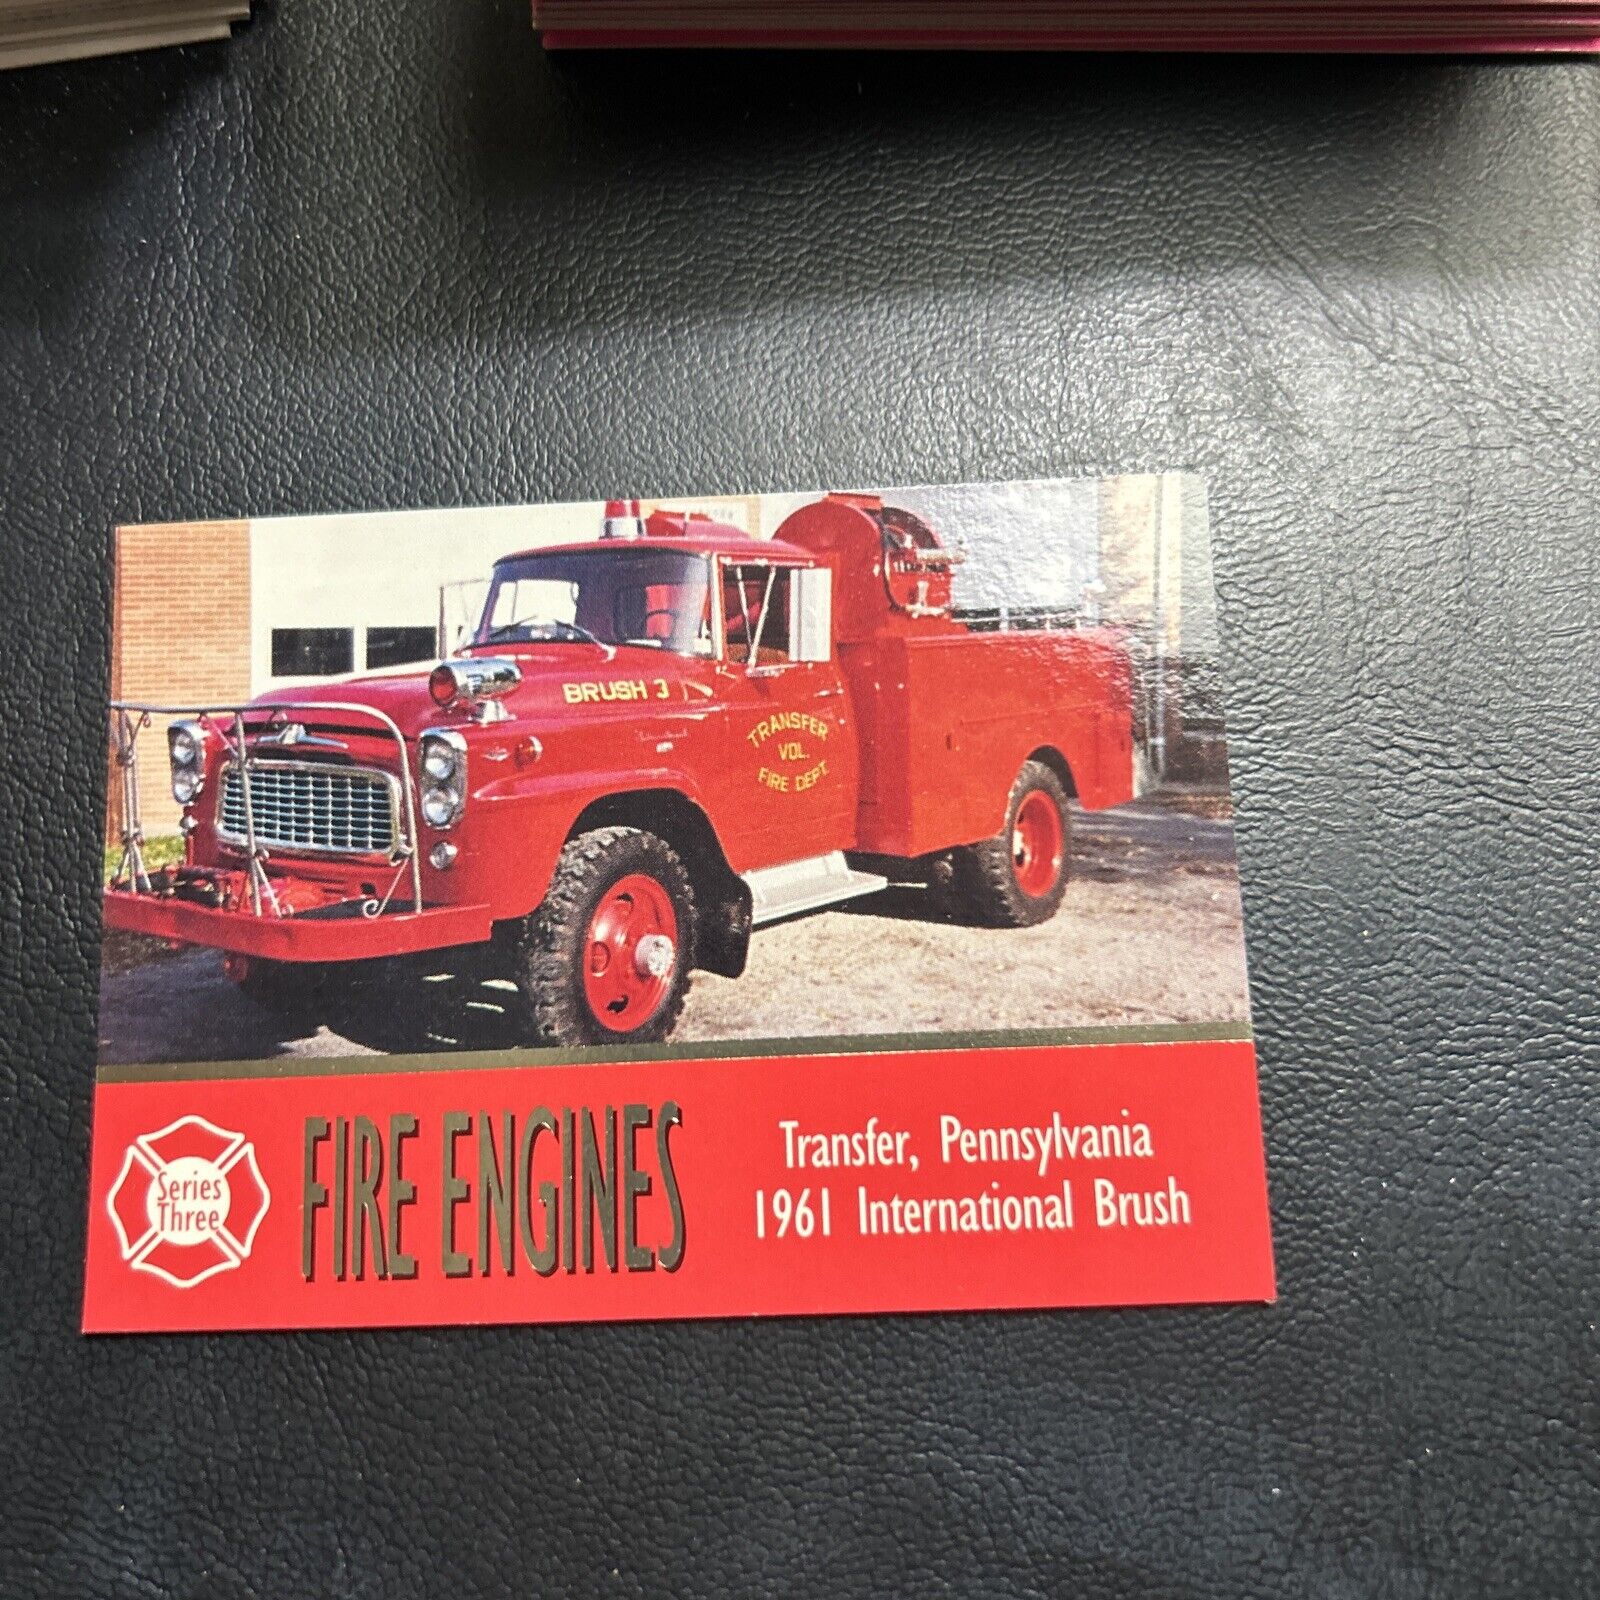 Jb29 Fire Engines Series 3 Three 1994 Bon Air #249 International Brush 1961